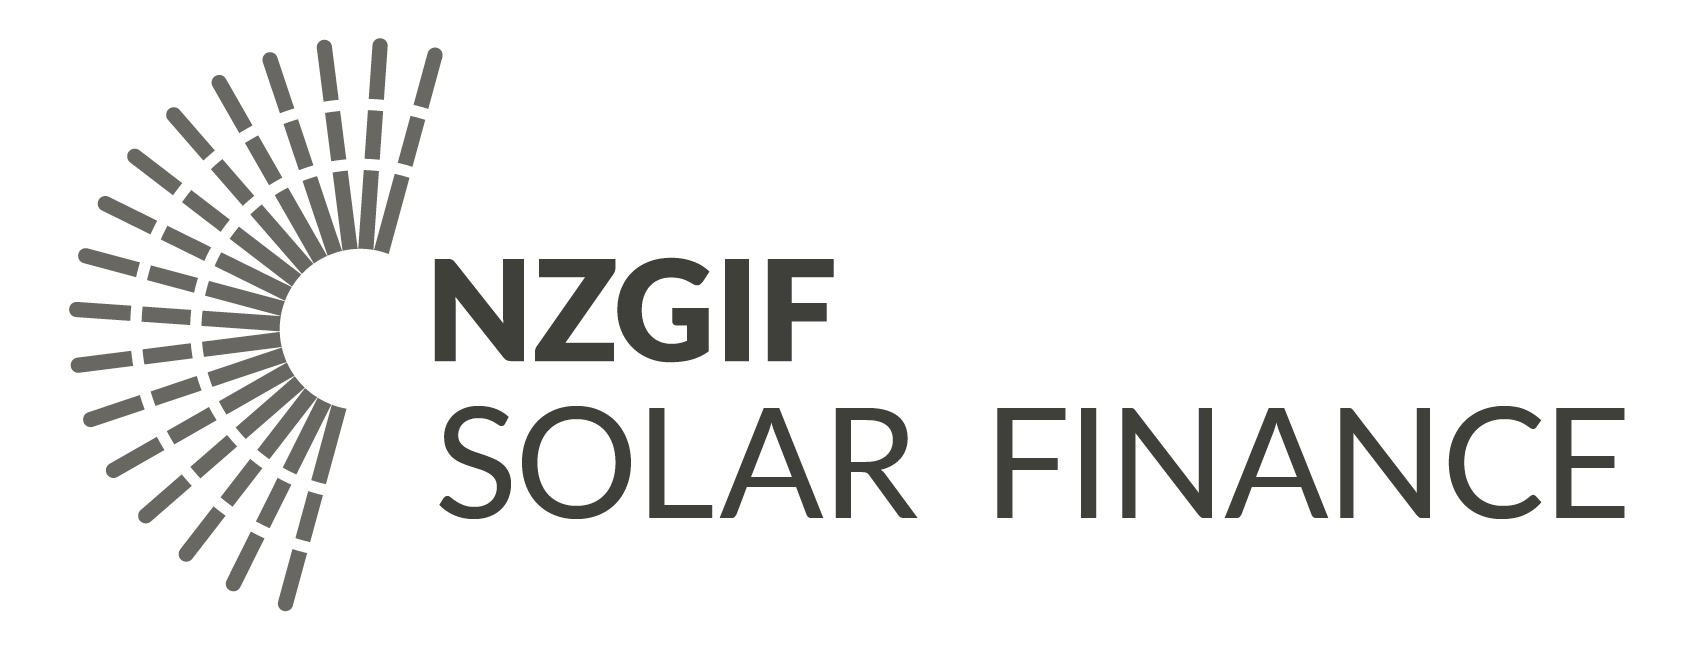 NZGIF Solar Finance Logo 1200x500 5